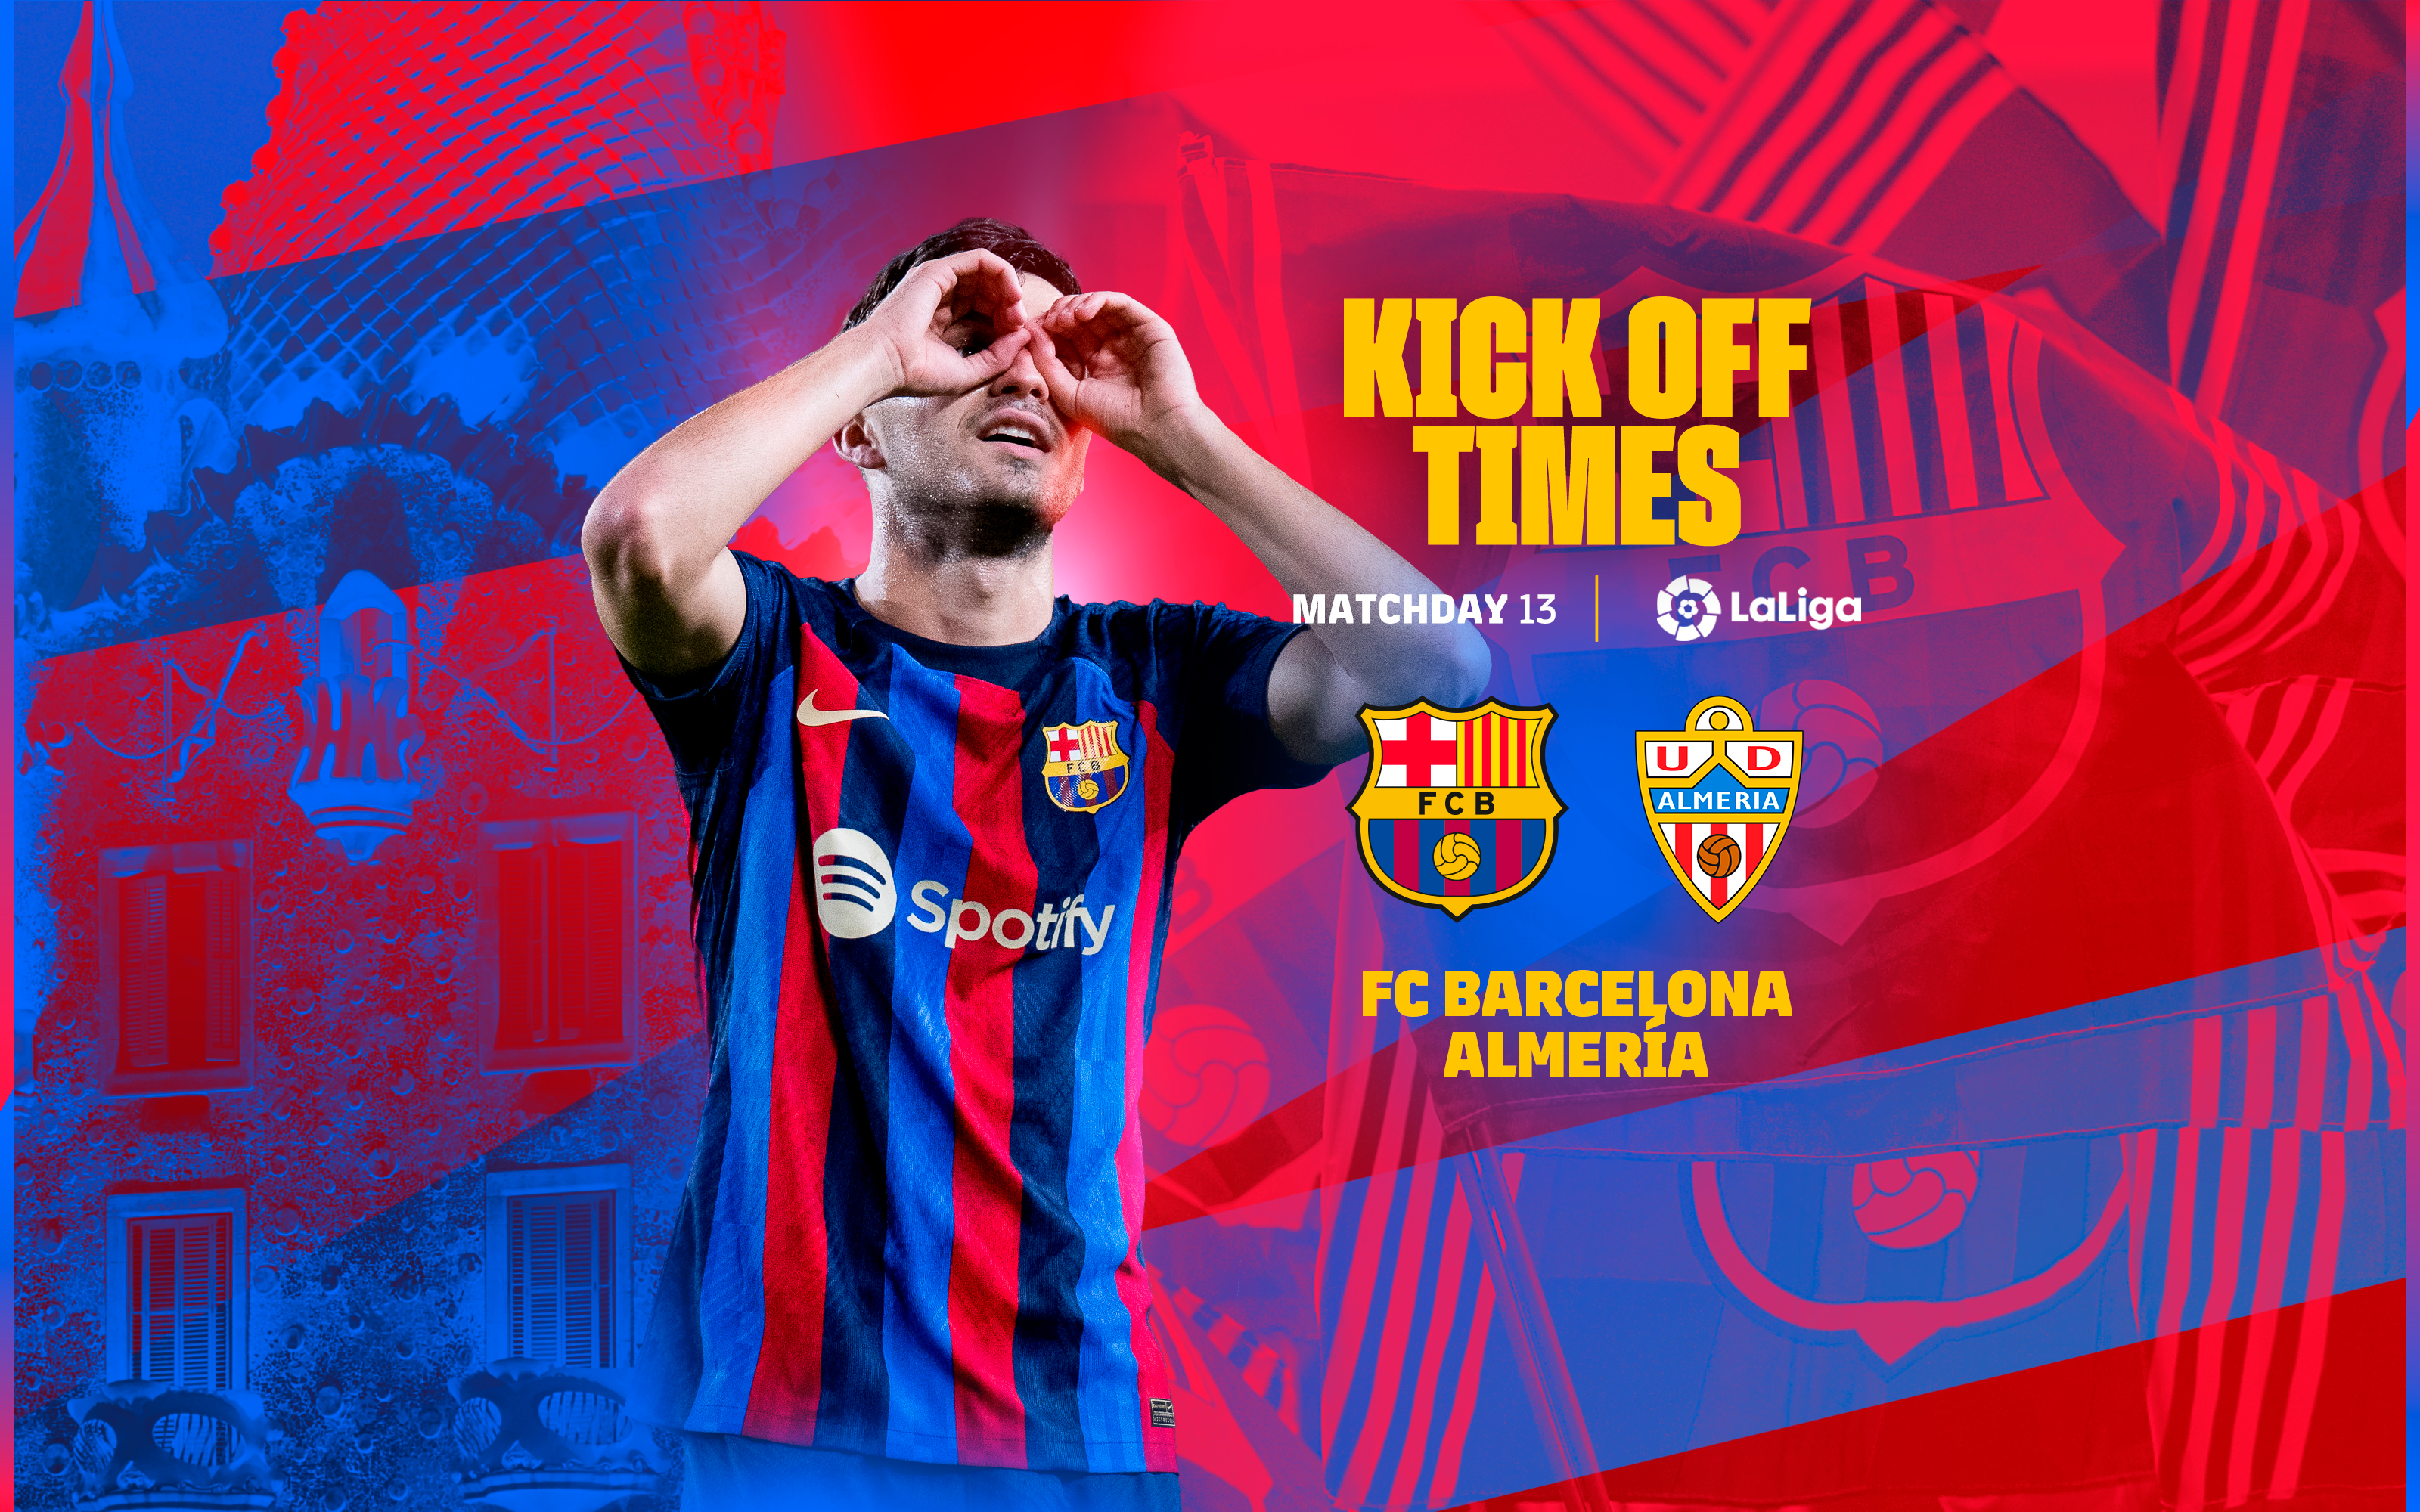 Watch FC Barcelona vs. UD Almeria Online: Live Stream, Start Time